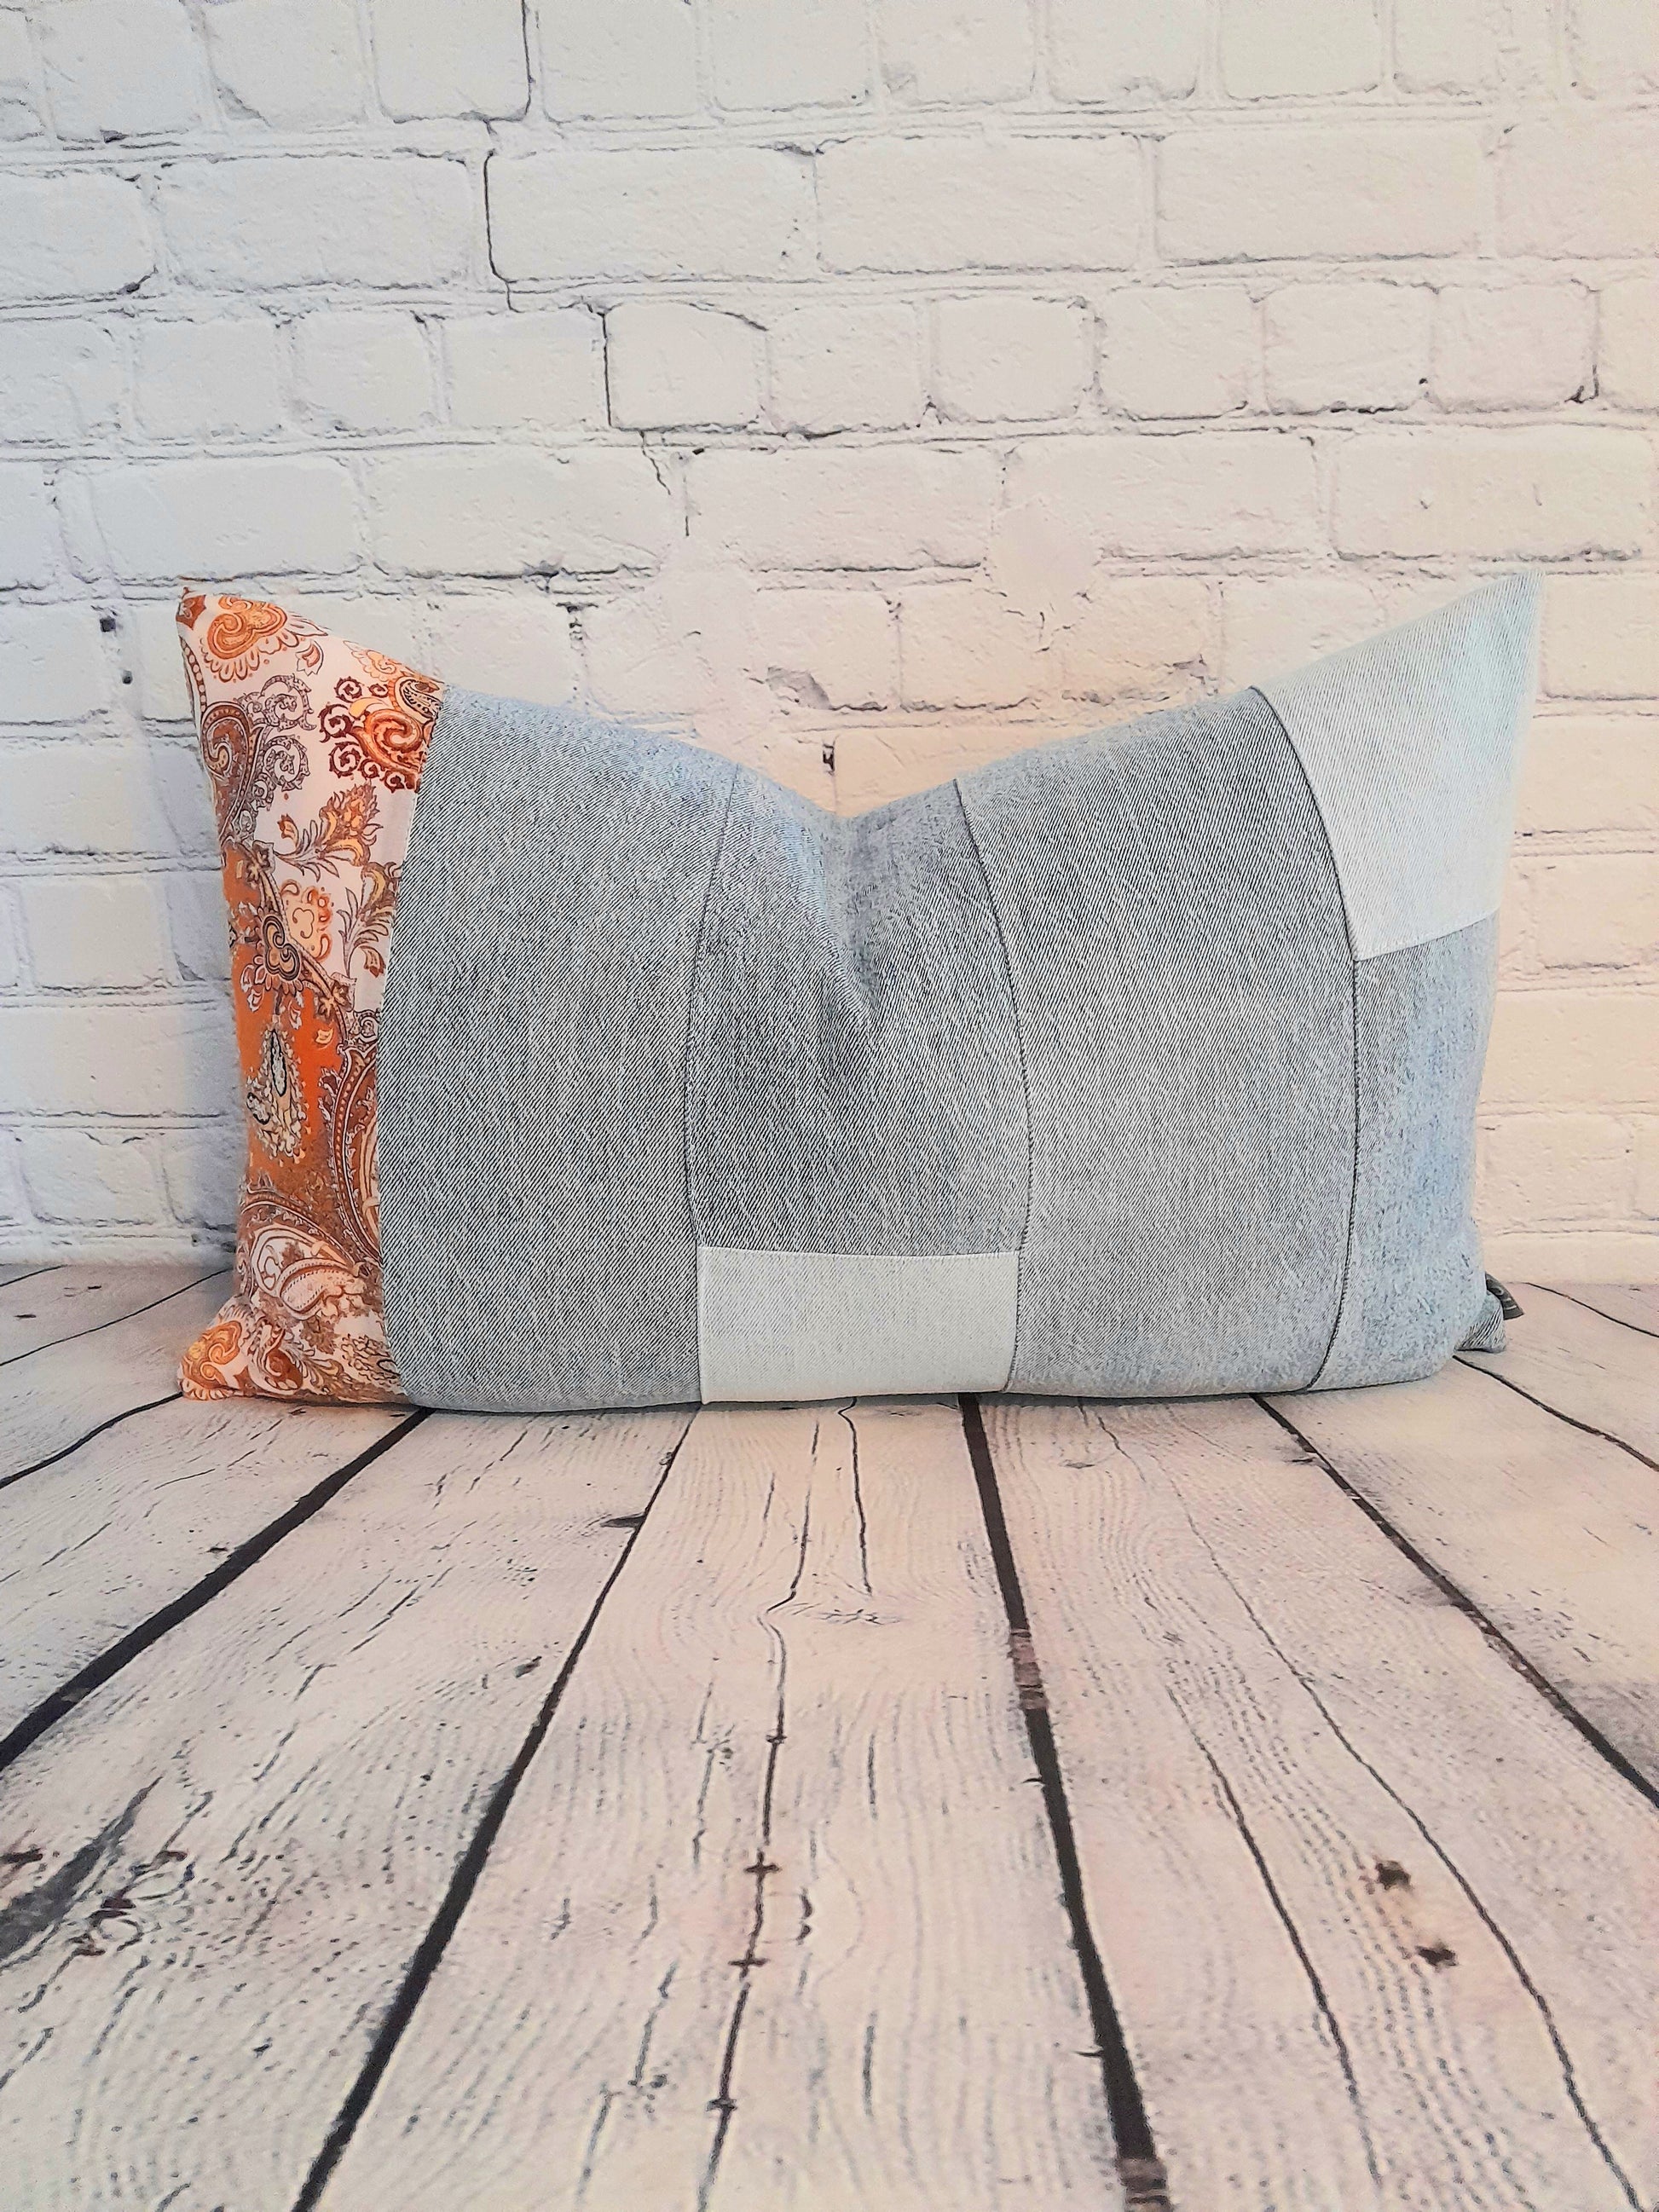 Vintage denim cushions, bolster pillows with orange vintage fabric.